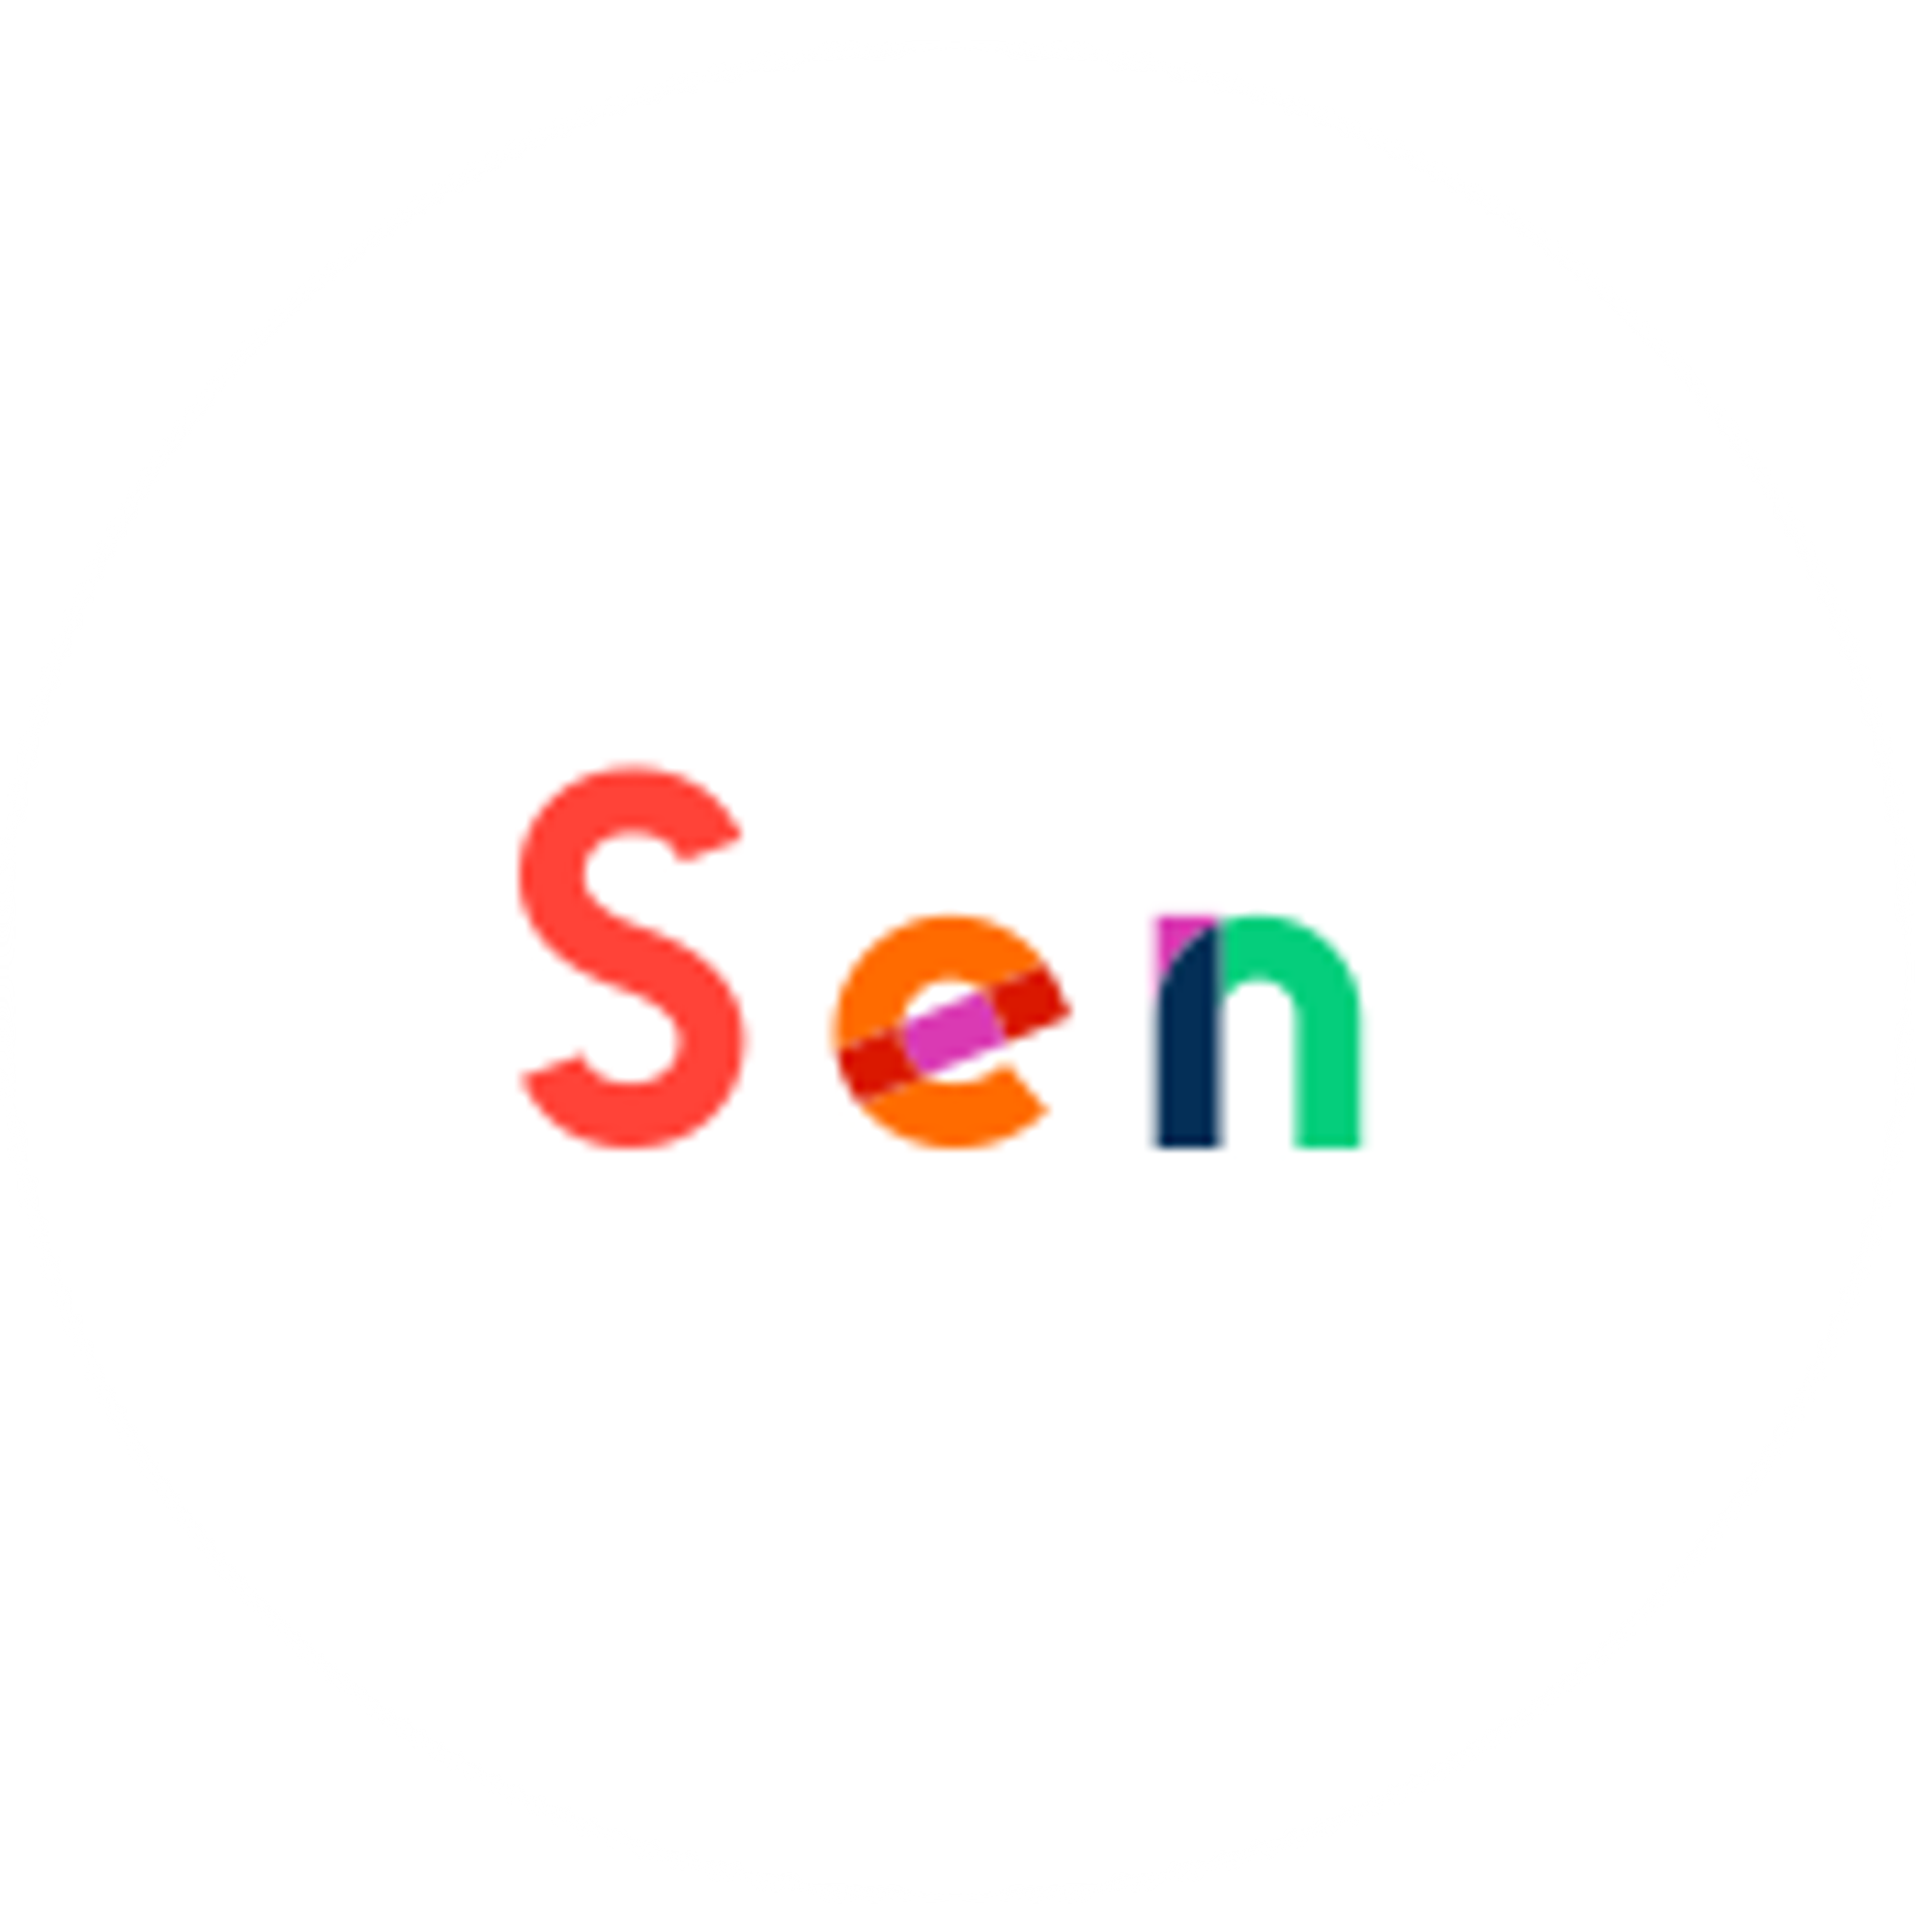 Sen’s blog